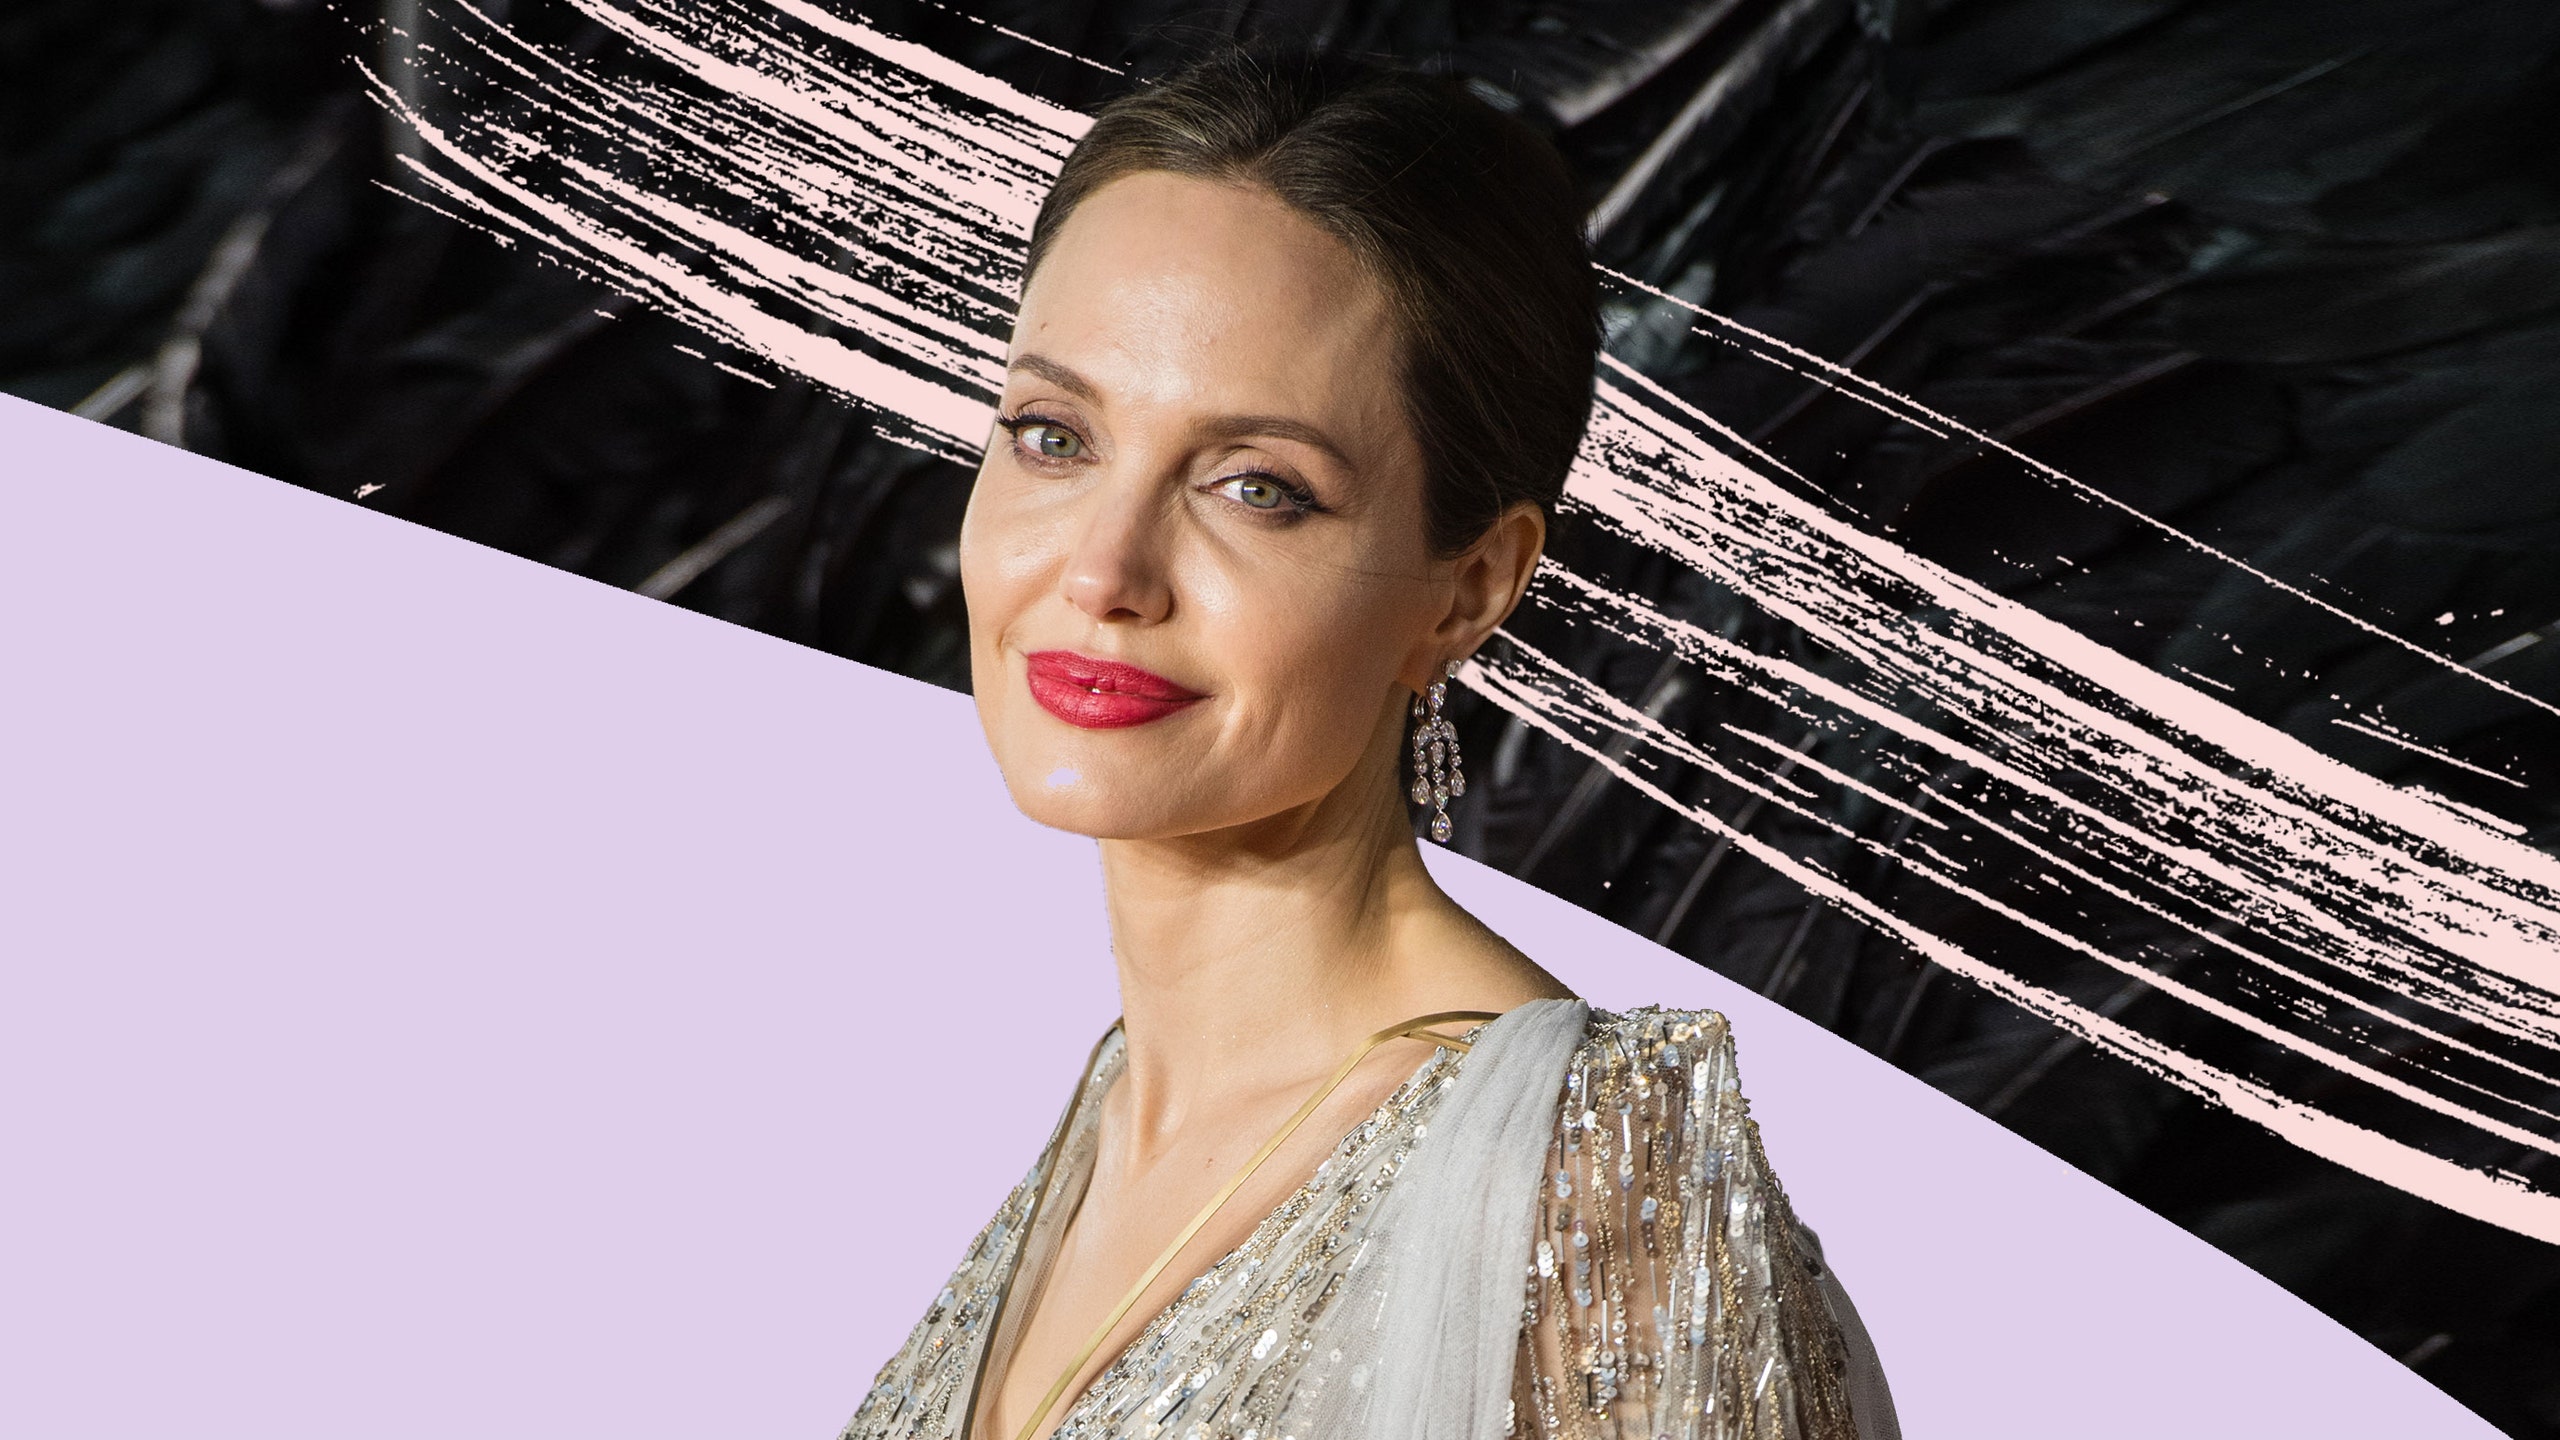 Angelina Jolie 2022 Wallpapers - Wallpaper Cave